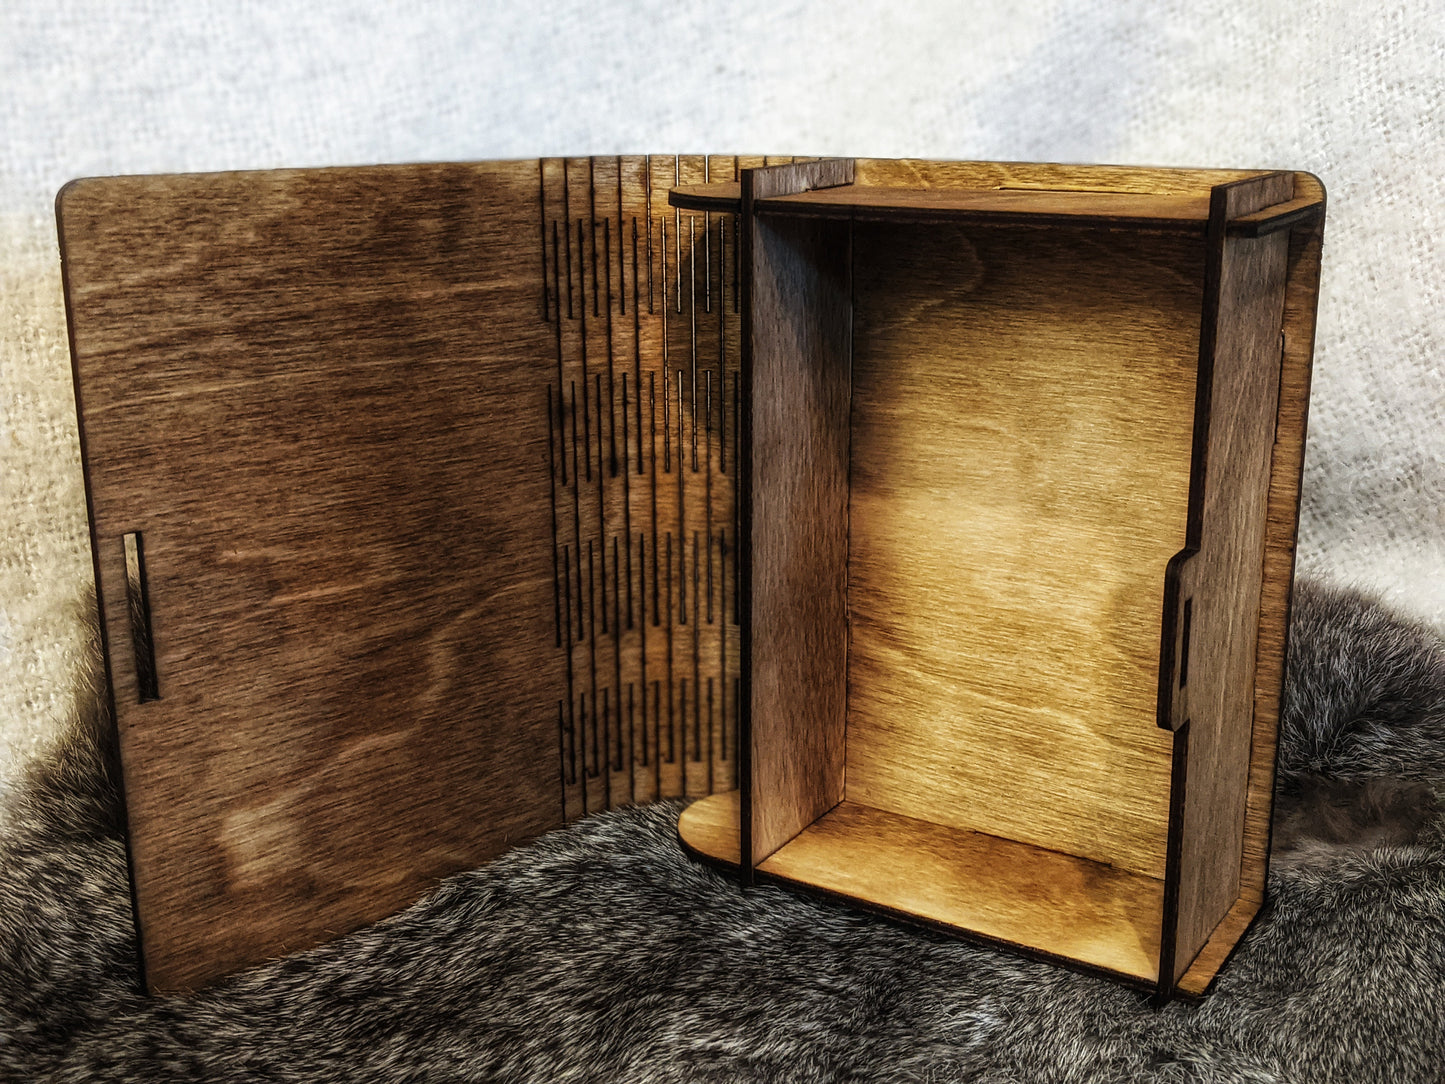 Mjolnir Altar Stash Box Wooden Book Living Edge Locking Heathen Asatru Rune